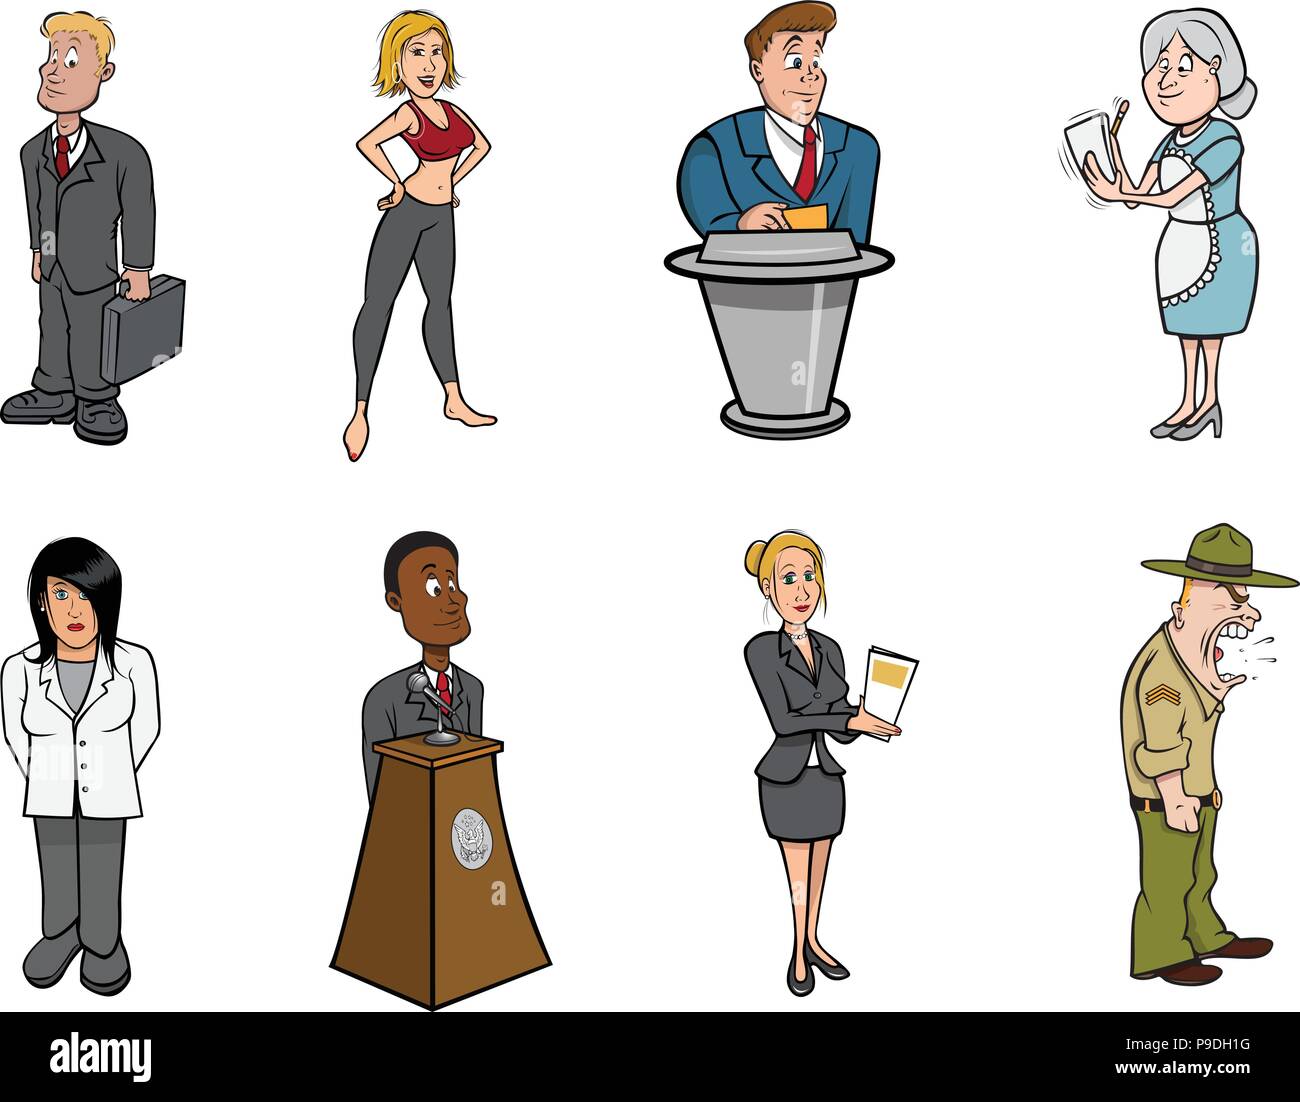 cartoon vector illustration of people professions Stock Vector